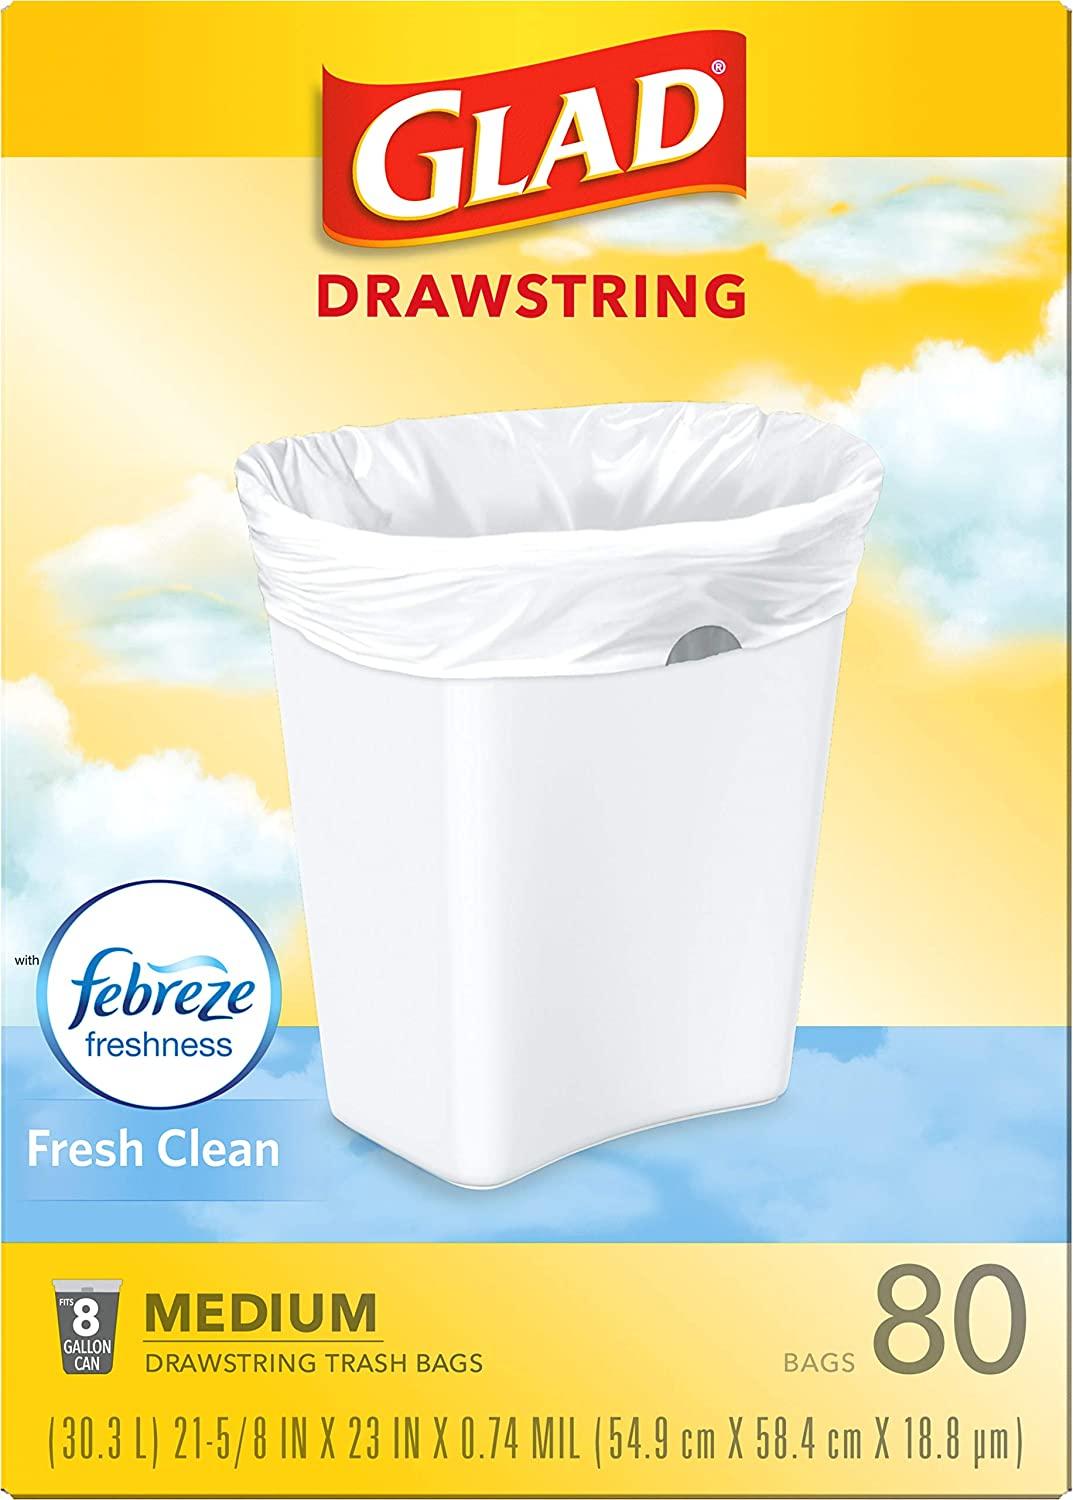  Glad Medium Drawstring Trash Bags, 8 Gallon, White, Gain  Original Scent with Febreze Freshness, 80 Count : Health & Household